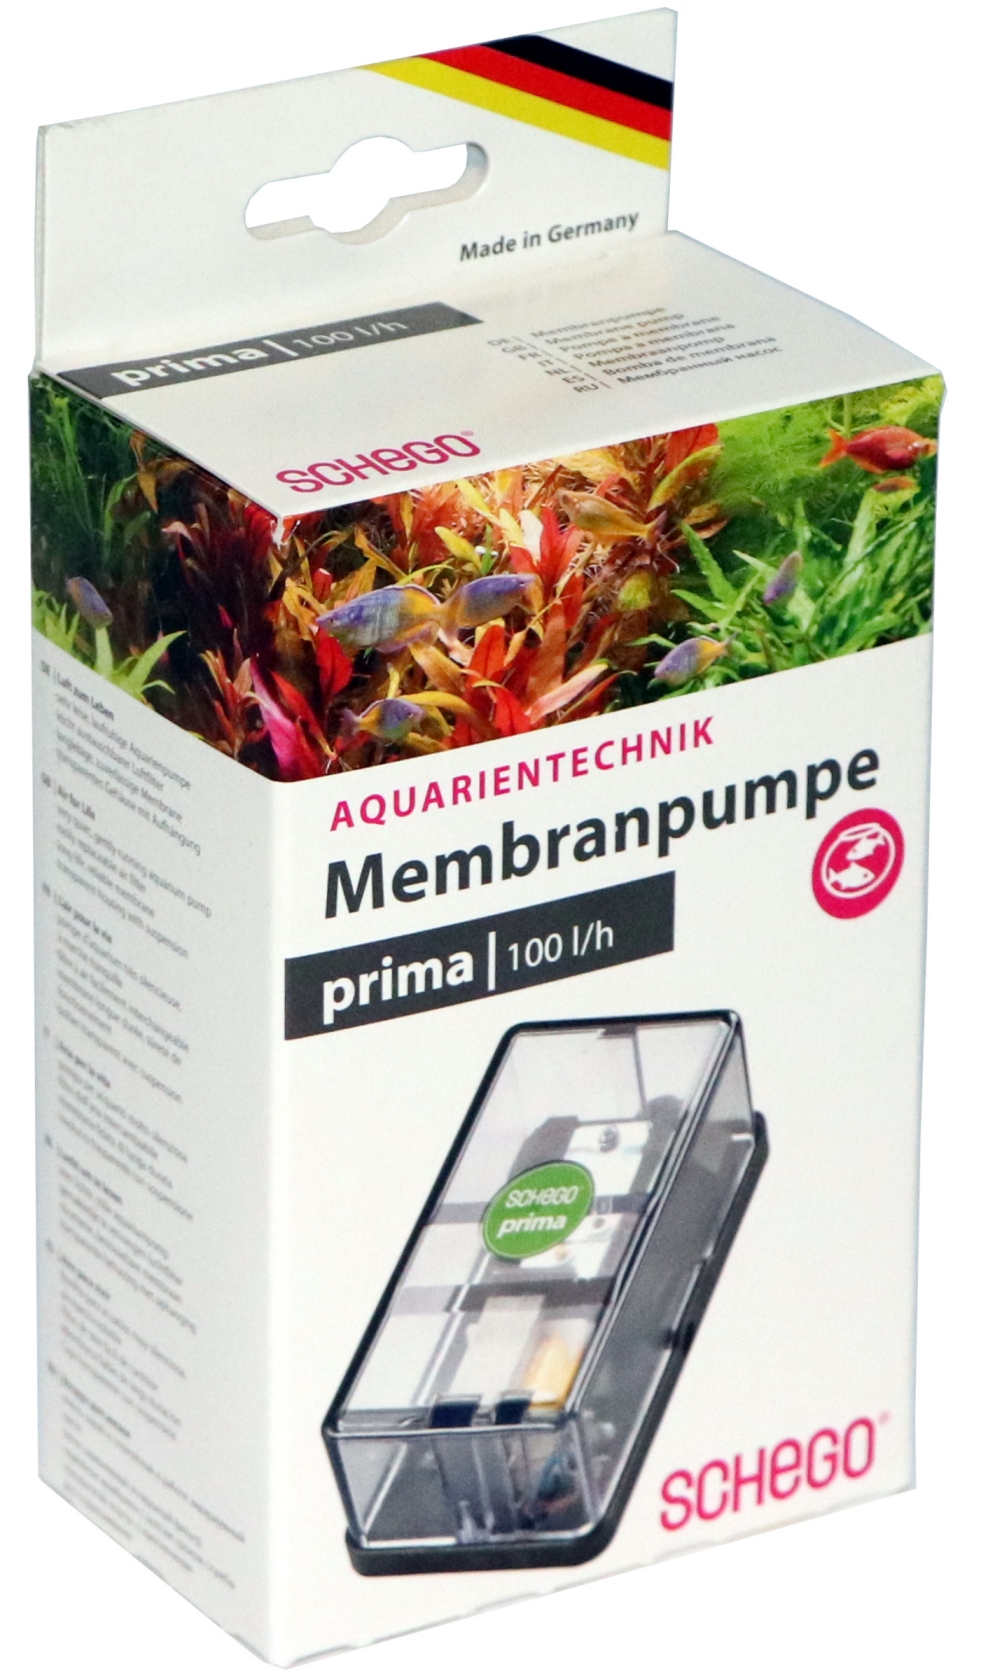 SCHEGO Membrane pump -Prima